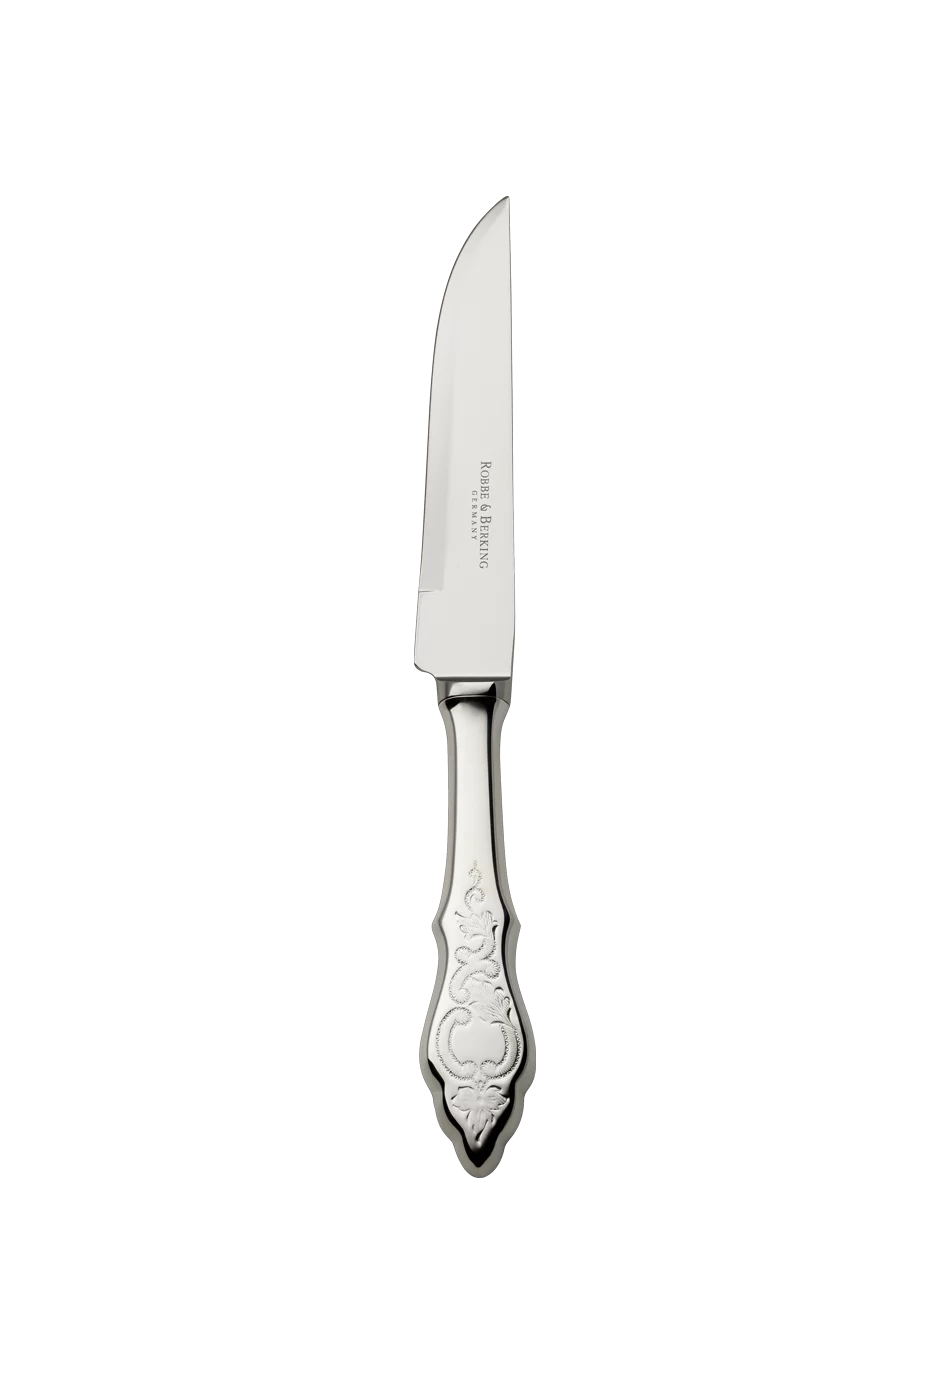 Ostfriesen Steak Knife (18/8 stainless steel)